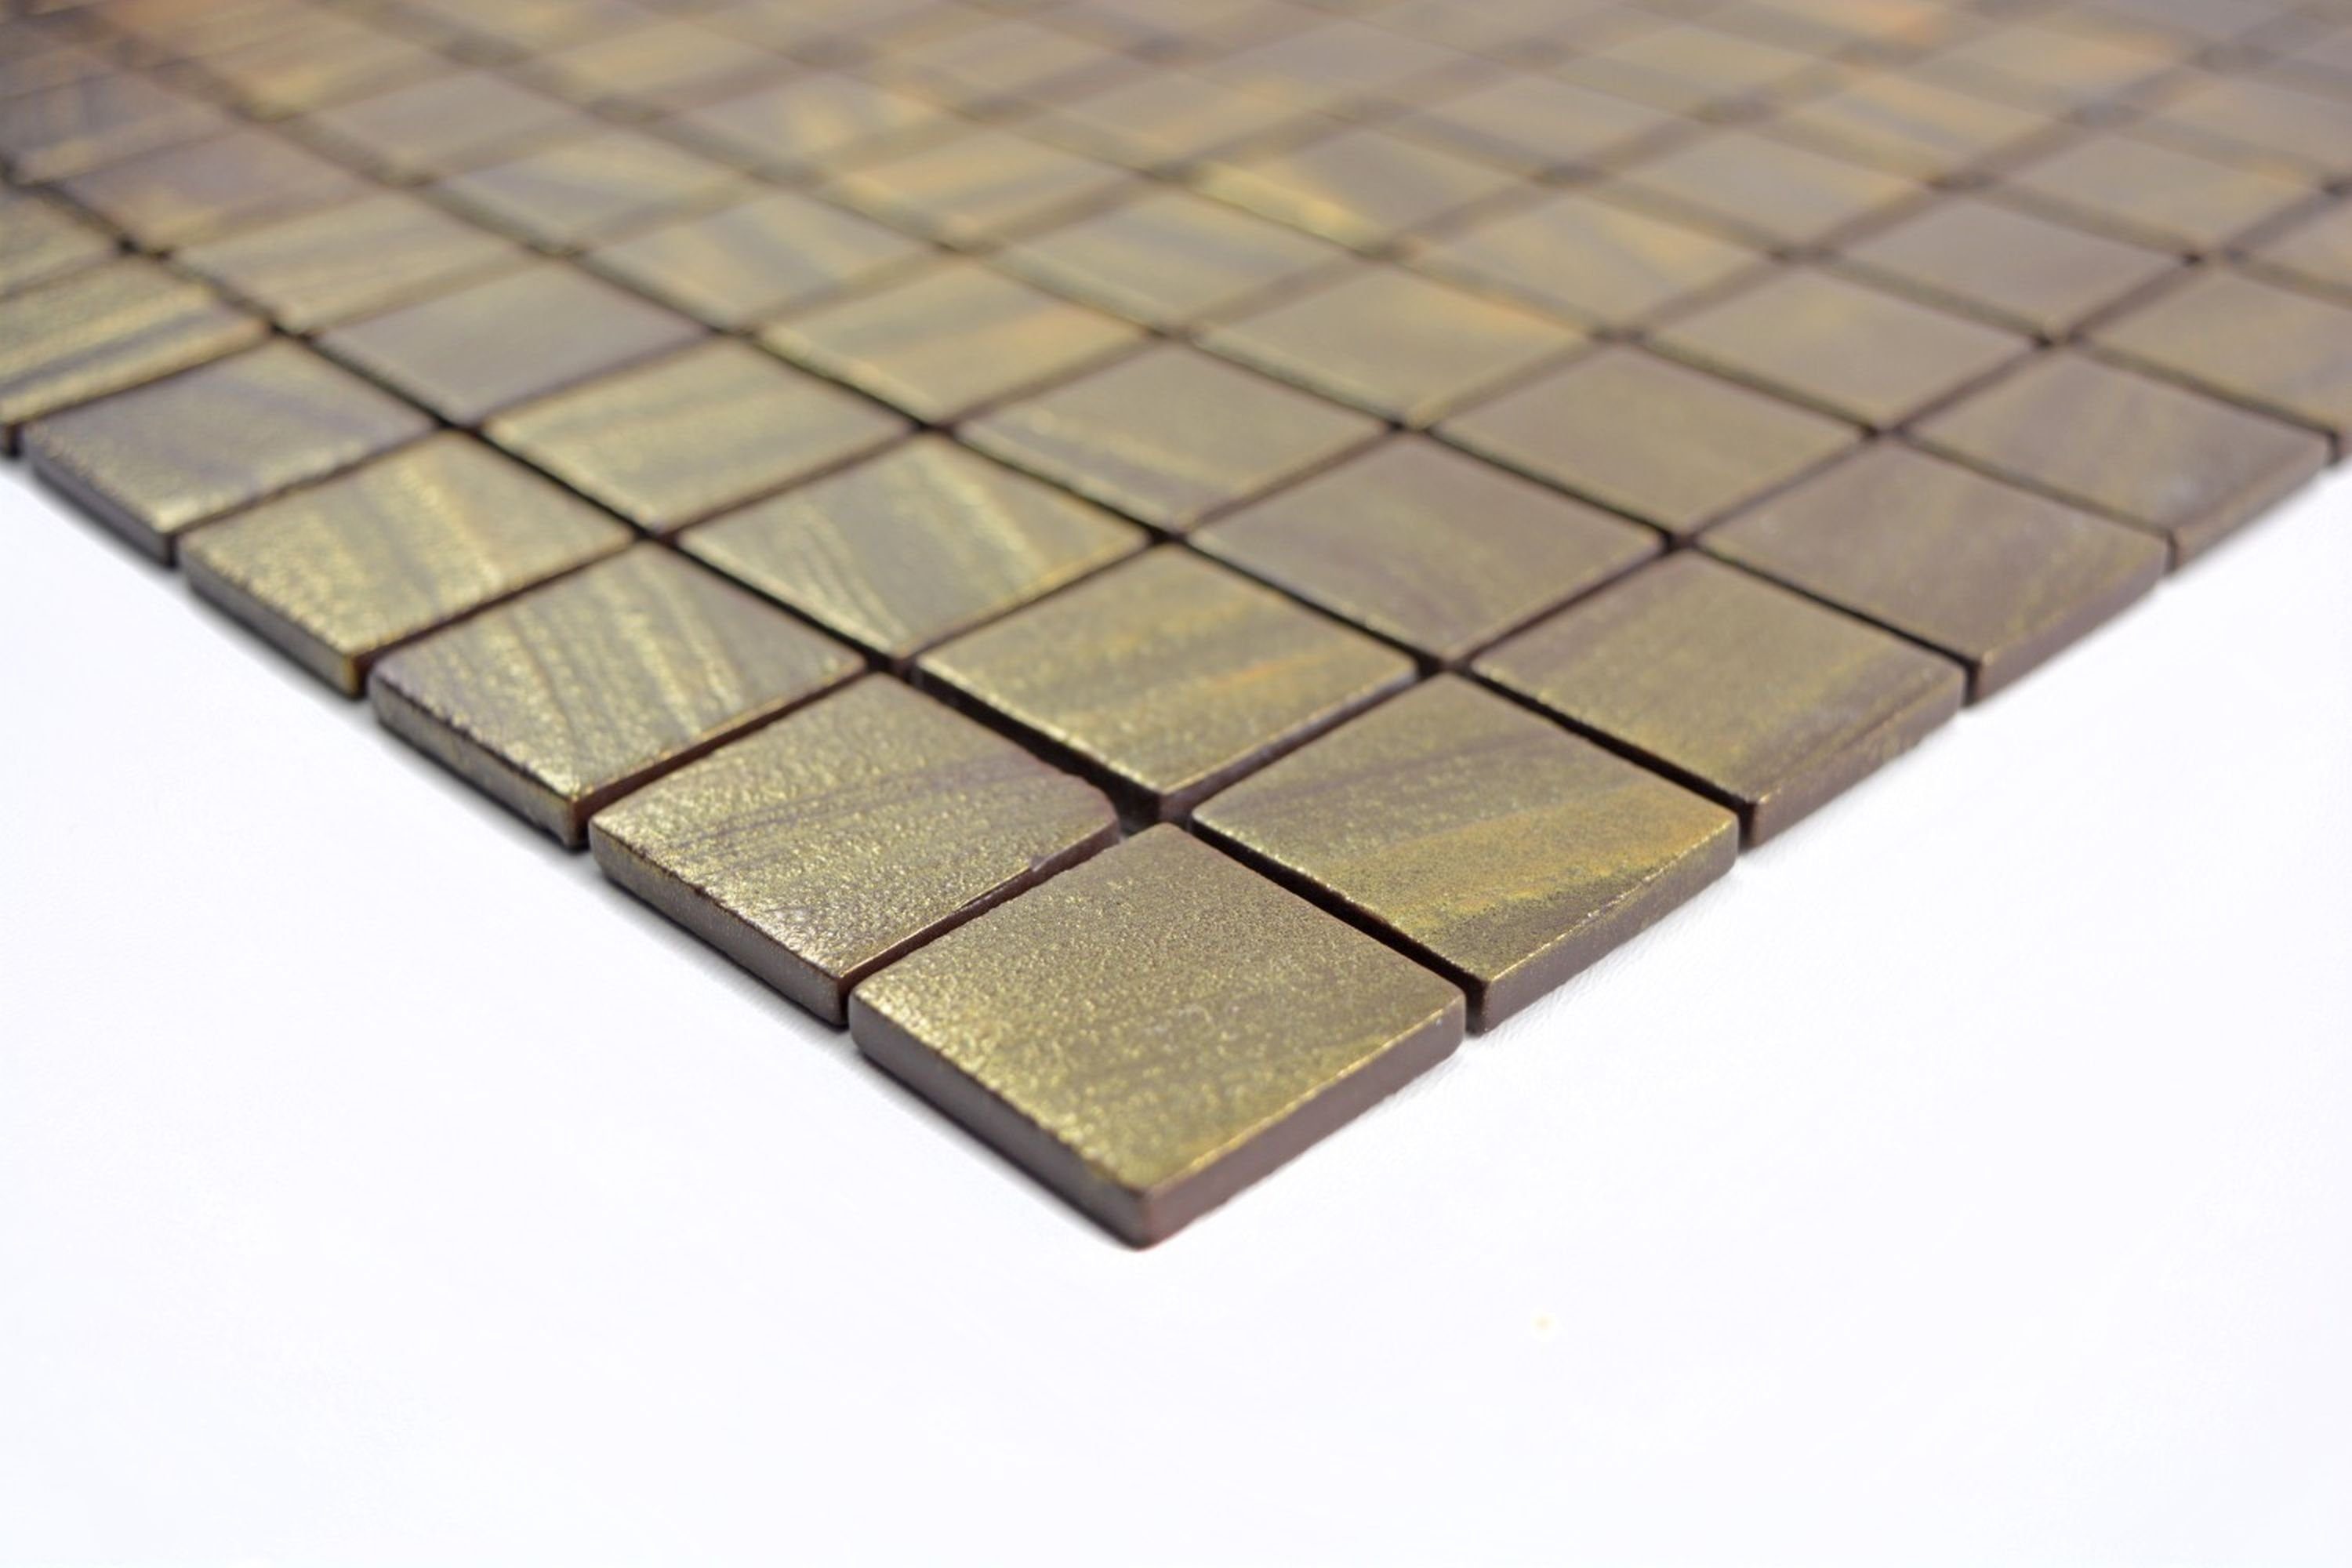 Mosani Mosaikfliesen Glasmosaik Nachhaltiger Wandbelag Recycling gold Fliesenspiegel satin